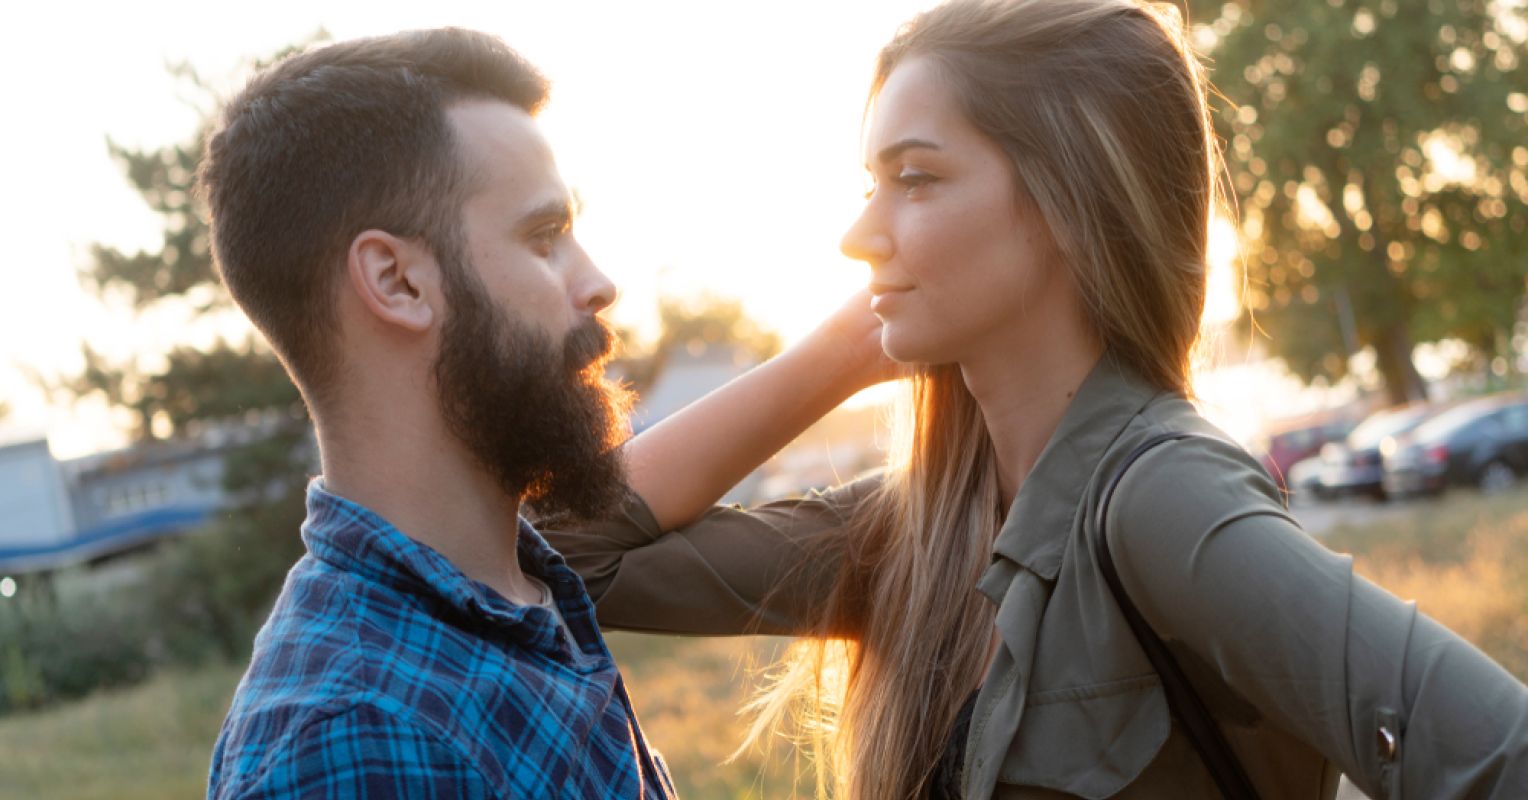 8 Key Nonverbal Signals of Sexual Interest